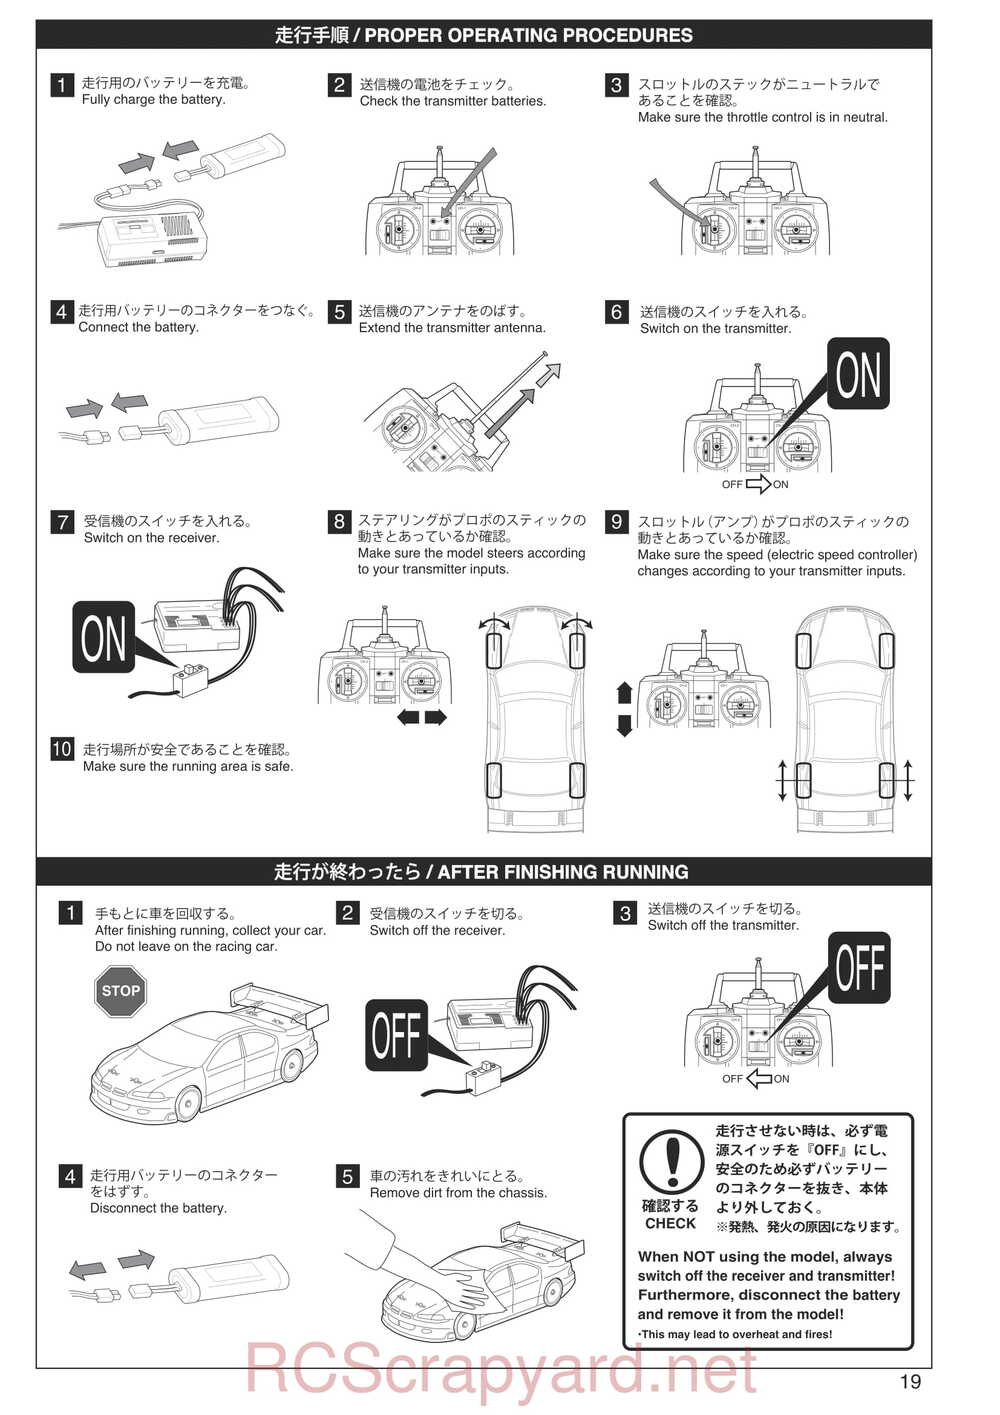 Kyosho - 30024 - TF6 - Manual - Page 19